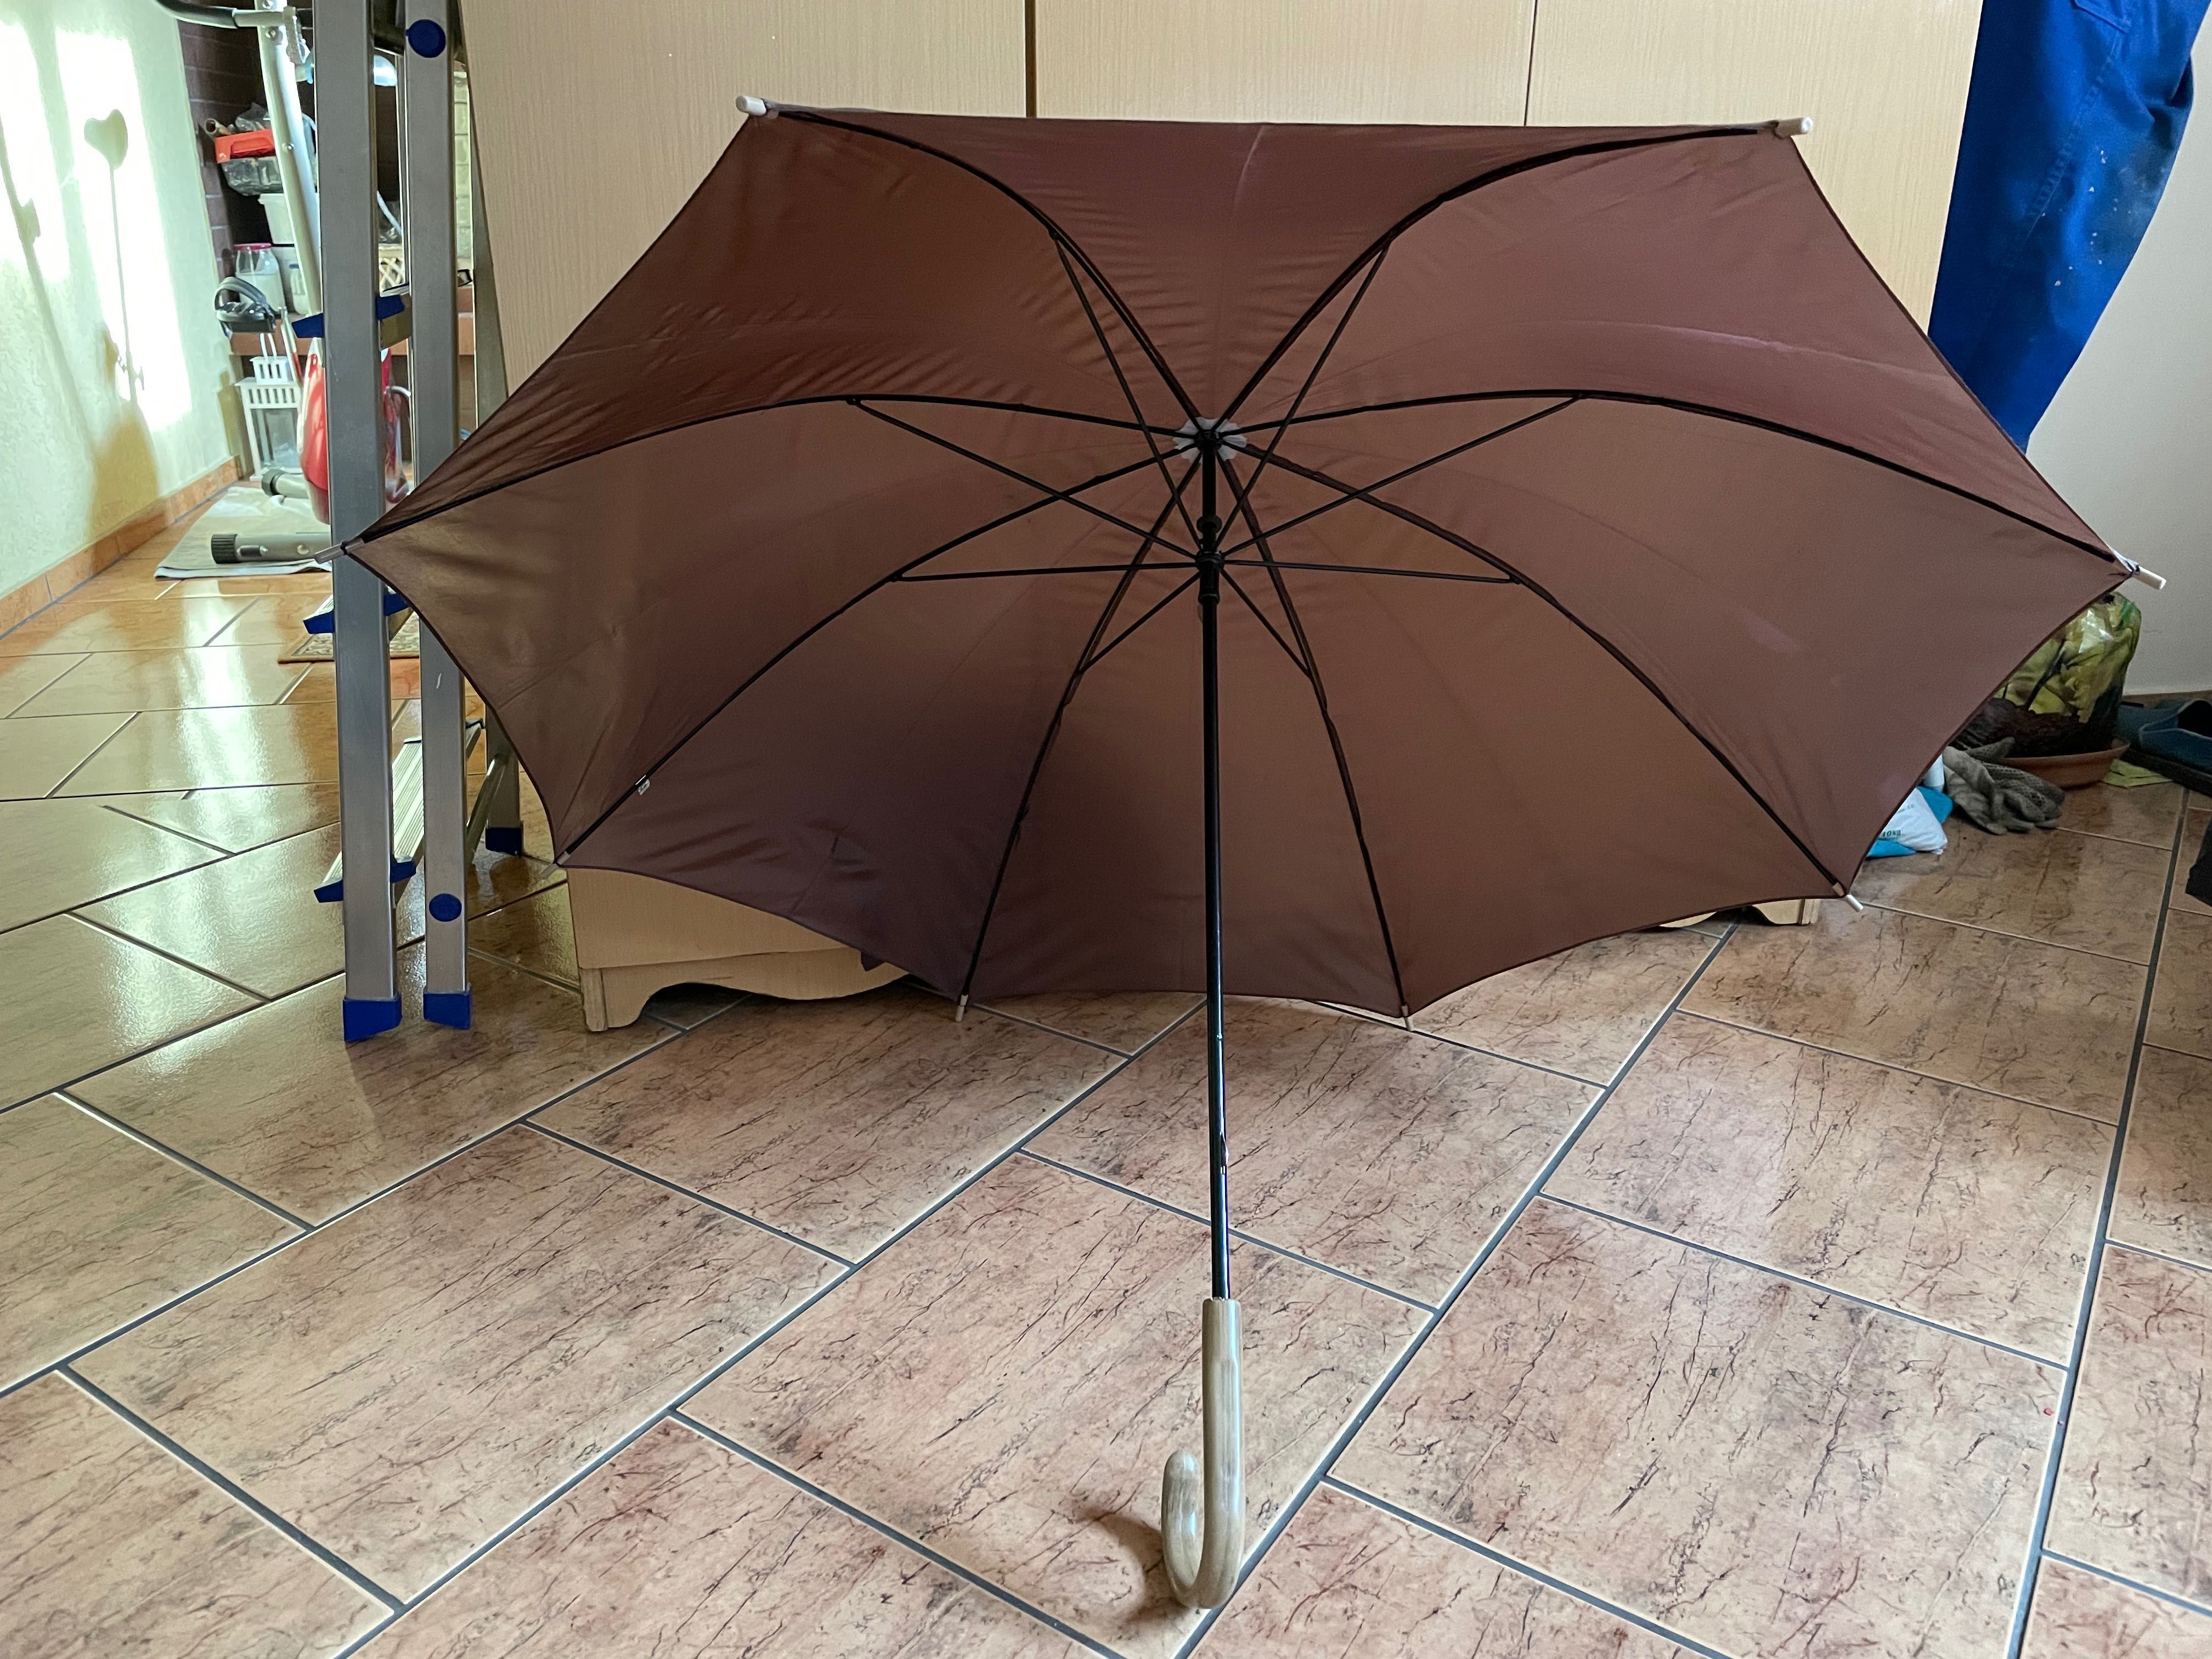 4 parasole i duży zestaw szklanek za 5 zł